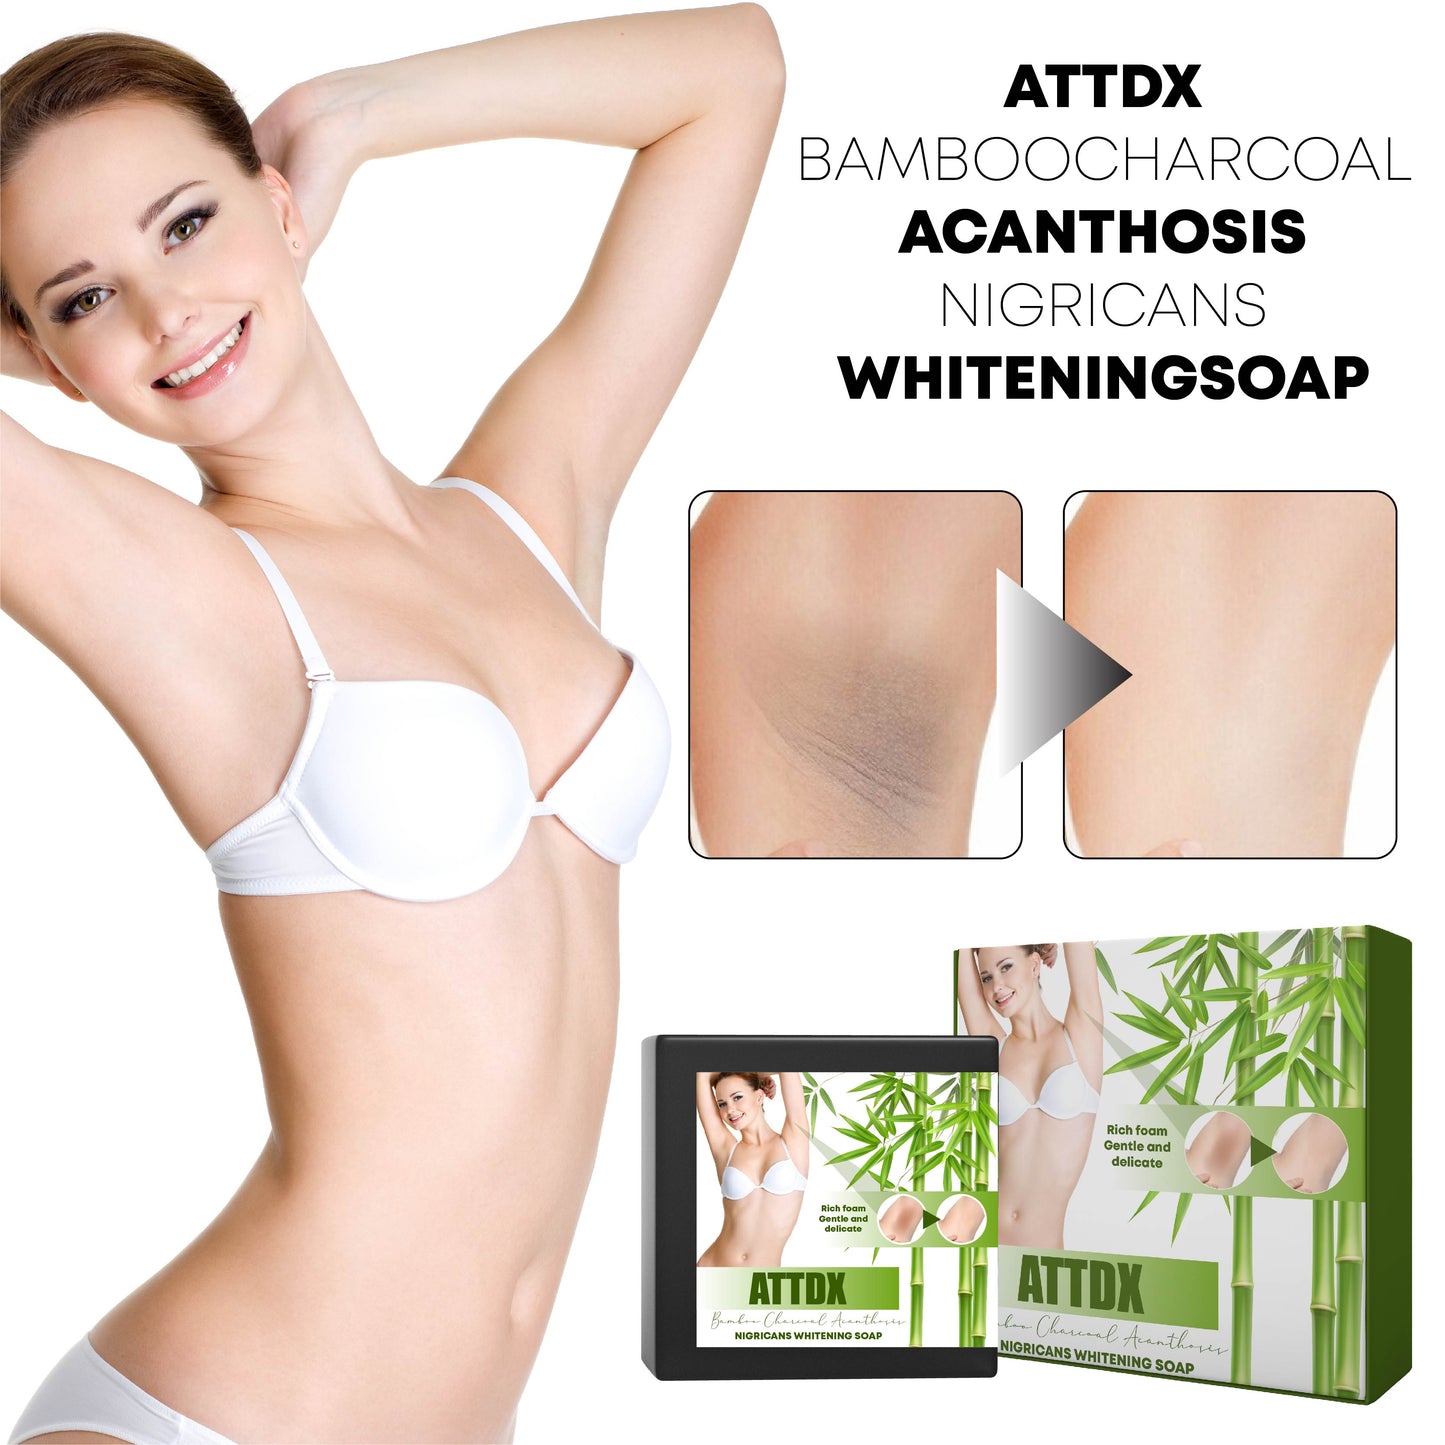 ATTDX BambooCharcoal Acanthosis Nigricans WhiteningSoap